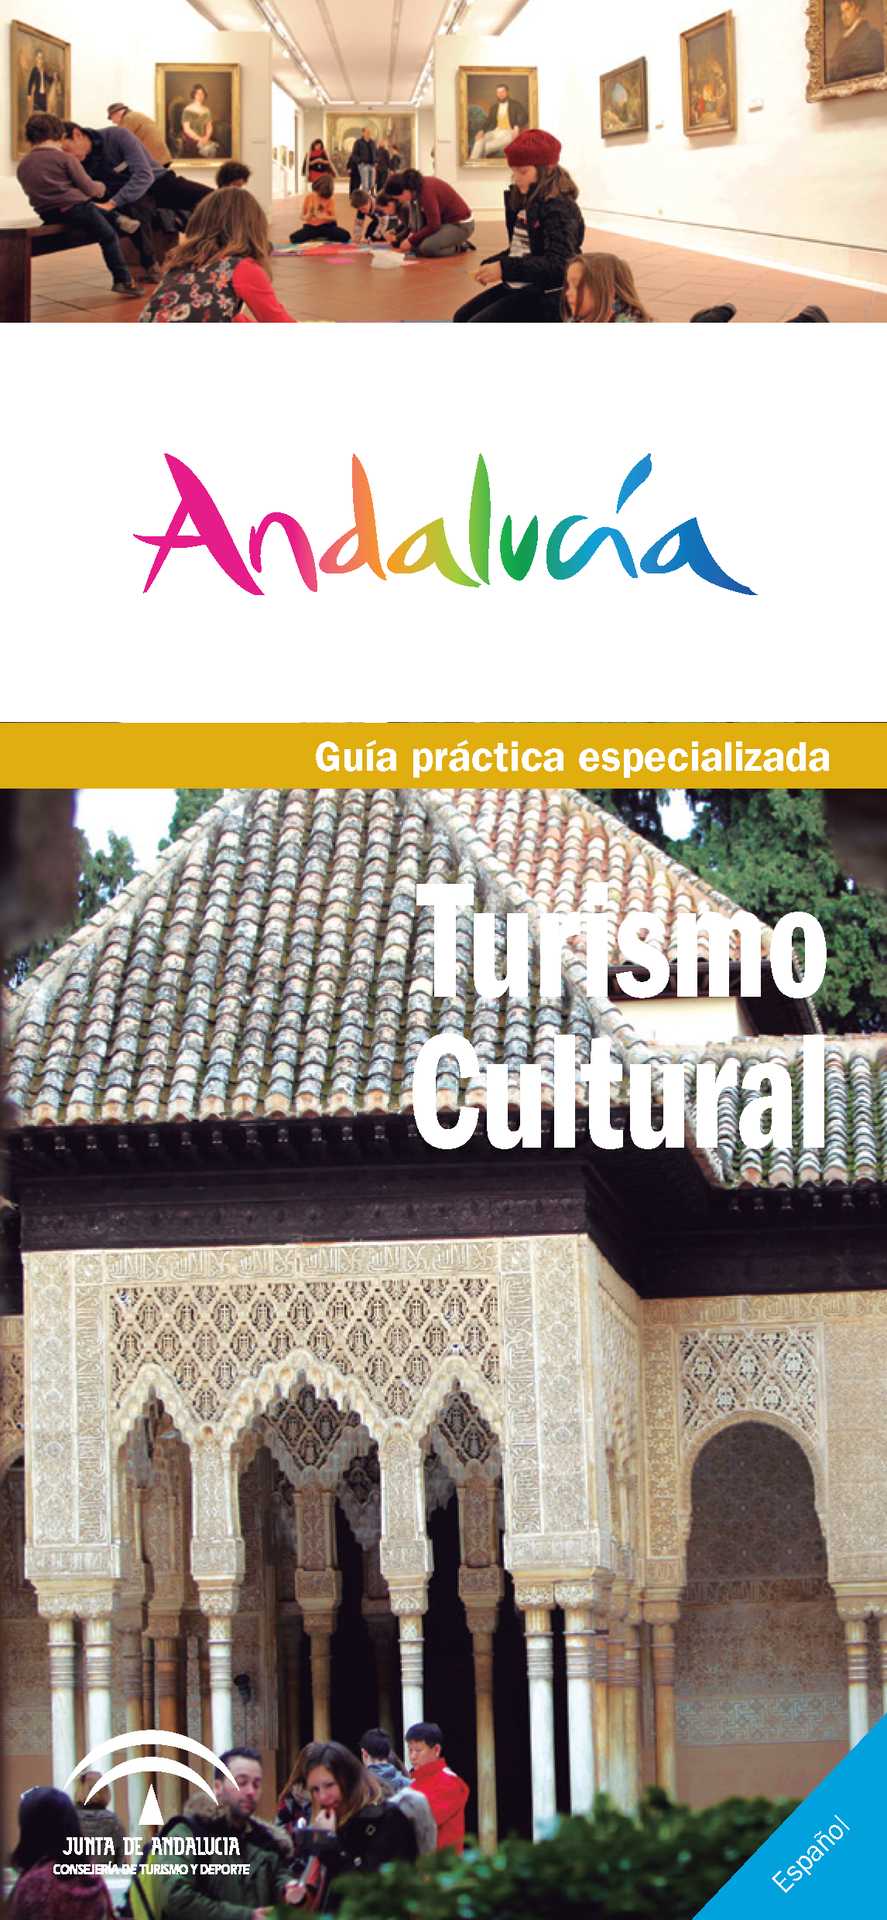 https://multimedia.andalucia.org/media/BE4F5F1F729B498BB311DD6E2FD9922D/img/5392F2FA80B84CCA853EB93BEF31AF70/guia_practica_turismo_cultural.jpg?responsive